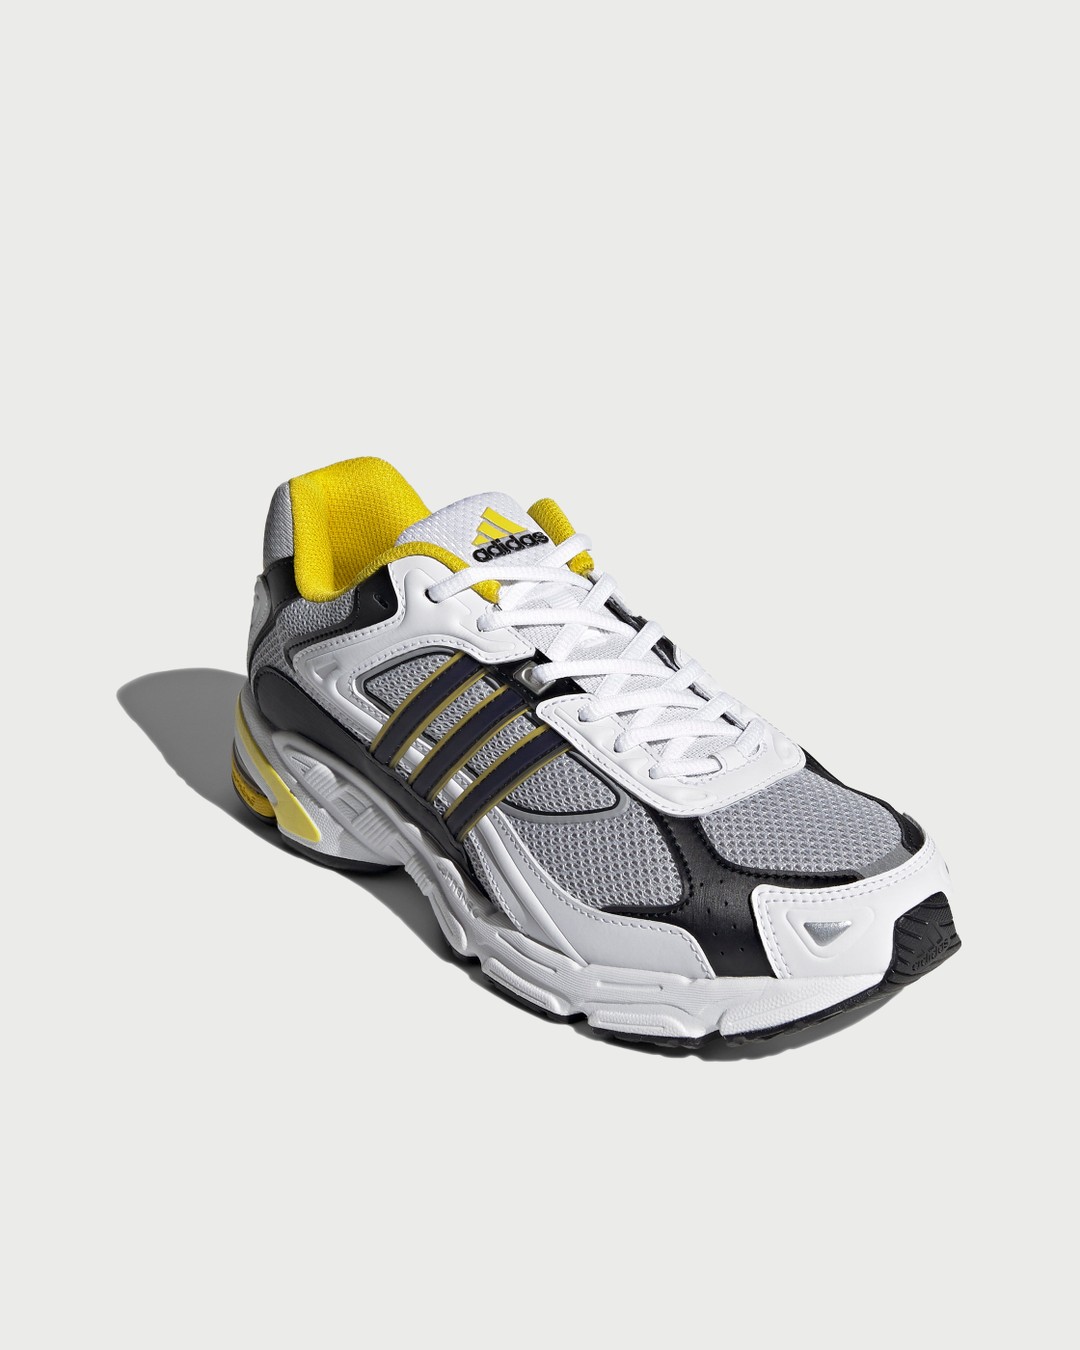 Adidas – Response CL White/Yellow - Low Top Sneakers - White - Image 3